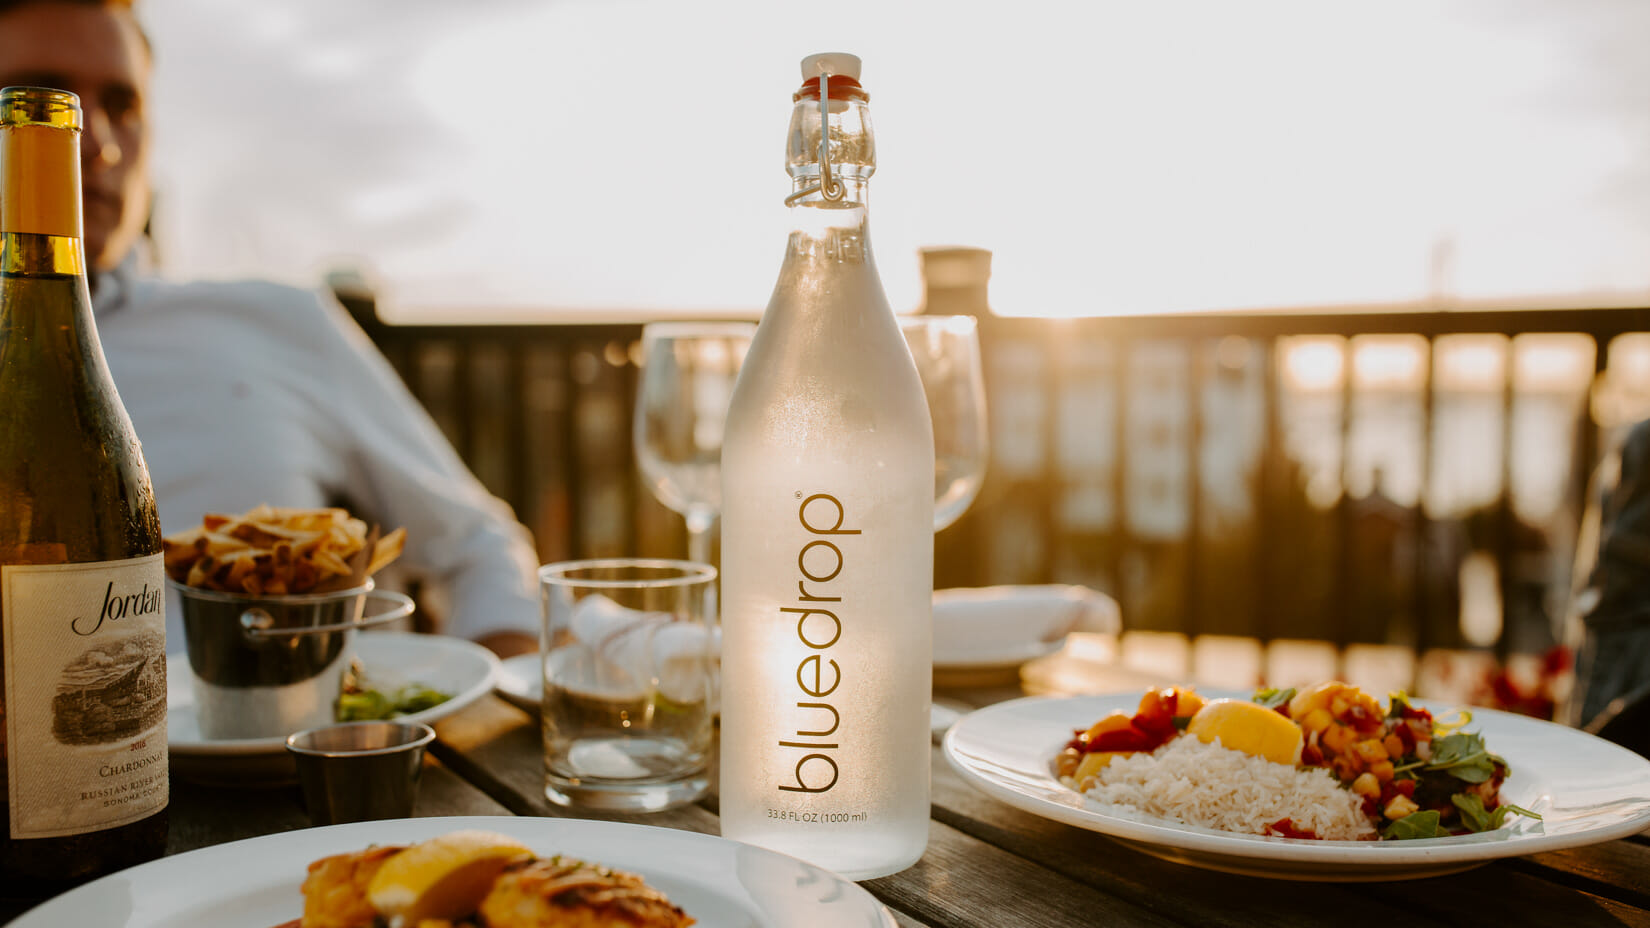 Bluedrop bottle on a restaurant table.